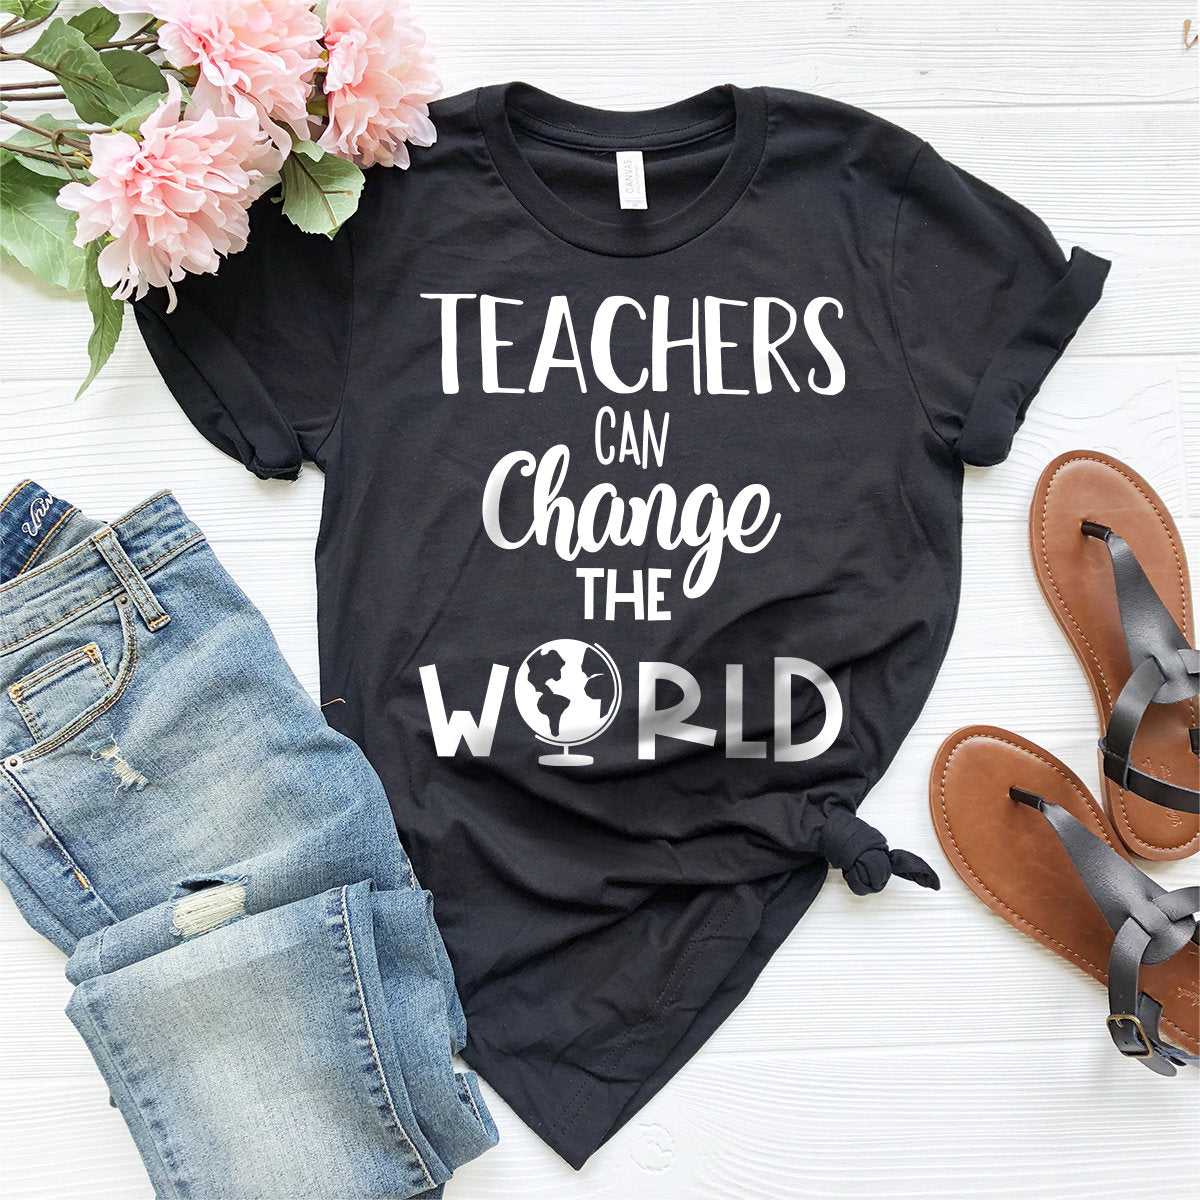 Gift For Teacher, Teacher T-Shirt, Teacher Appreciation, Teacher Gifts, Funny Teacher Shirt, Teacher Can Change The World Tee - Fastdeliverytees.com